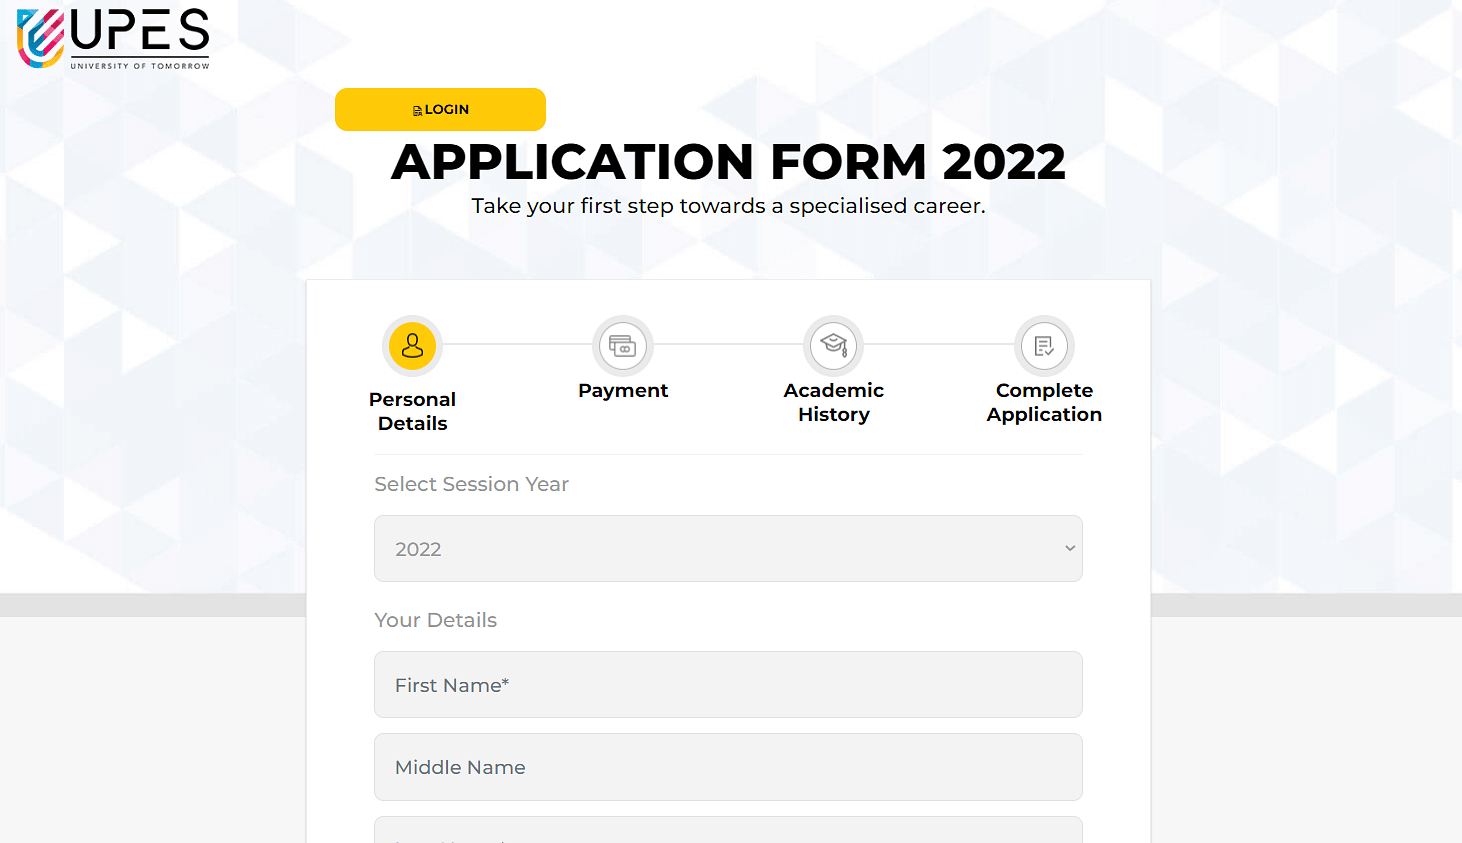 UPESMET Application Form 2022